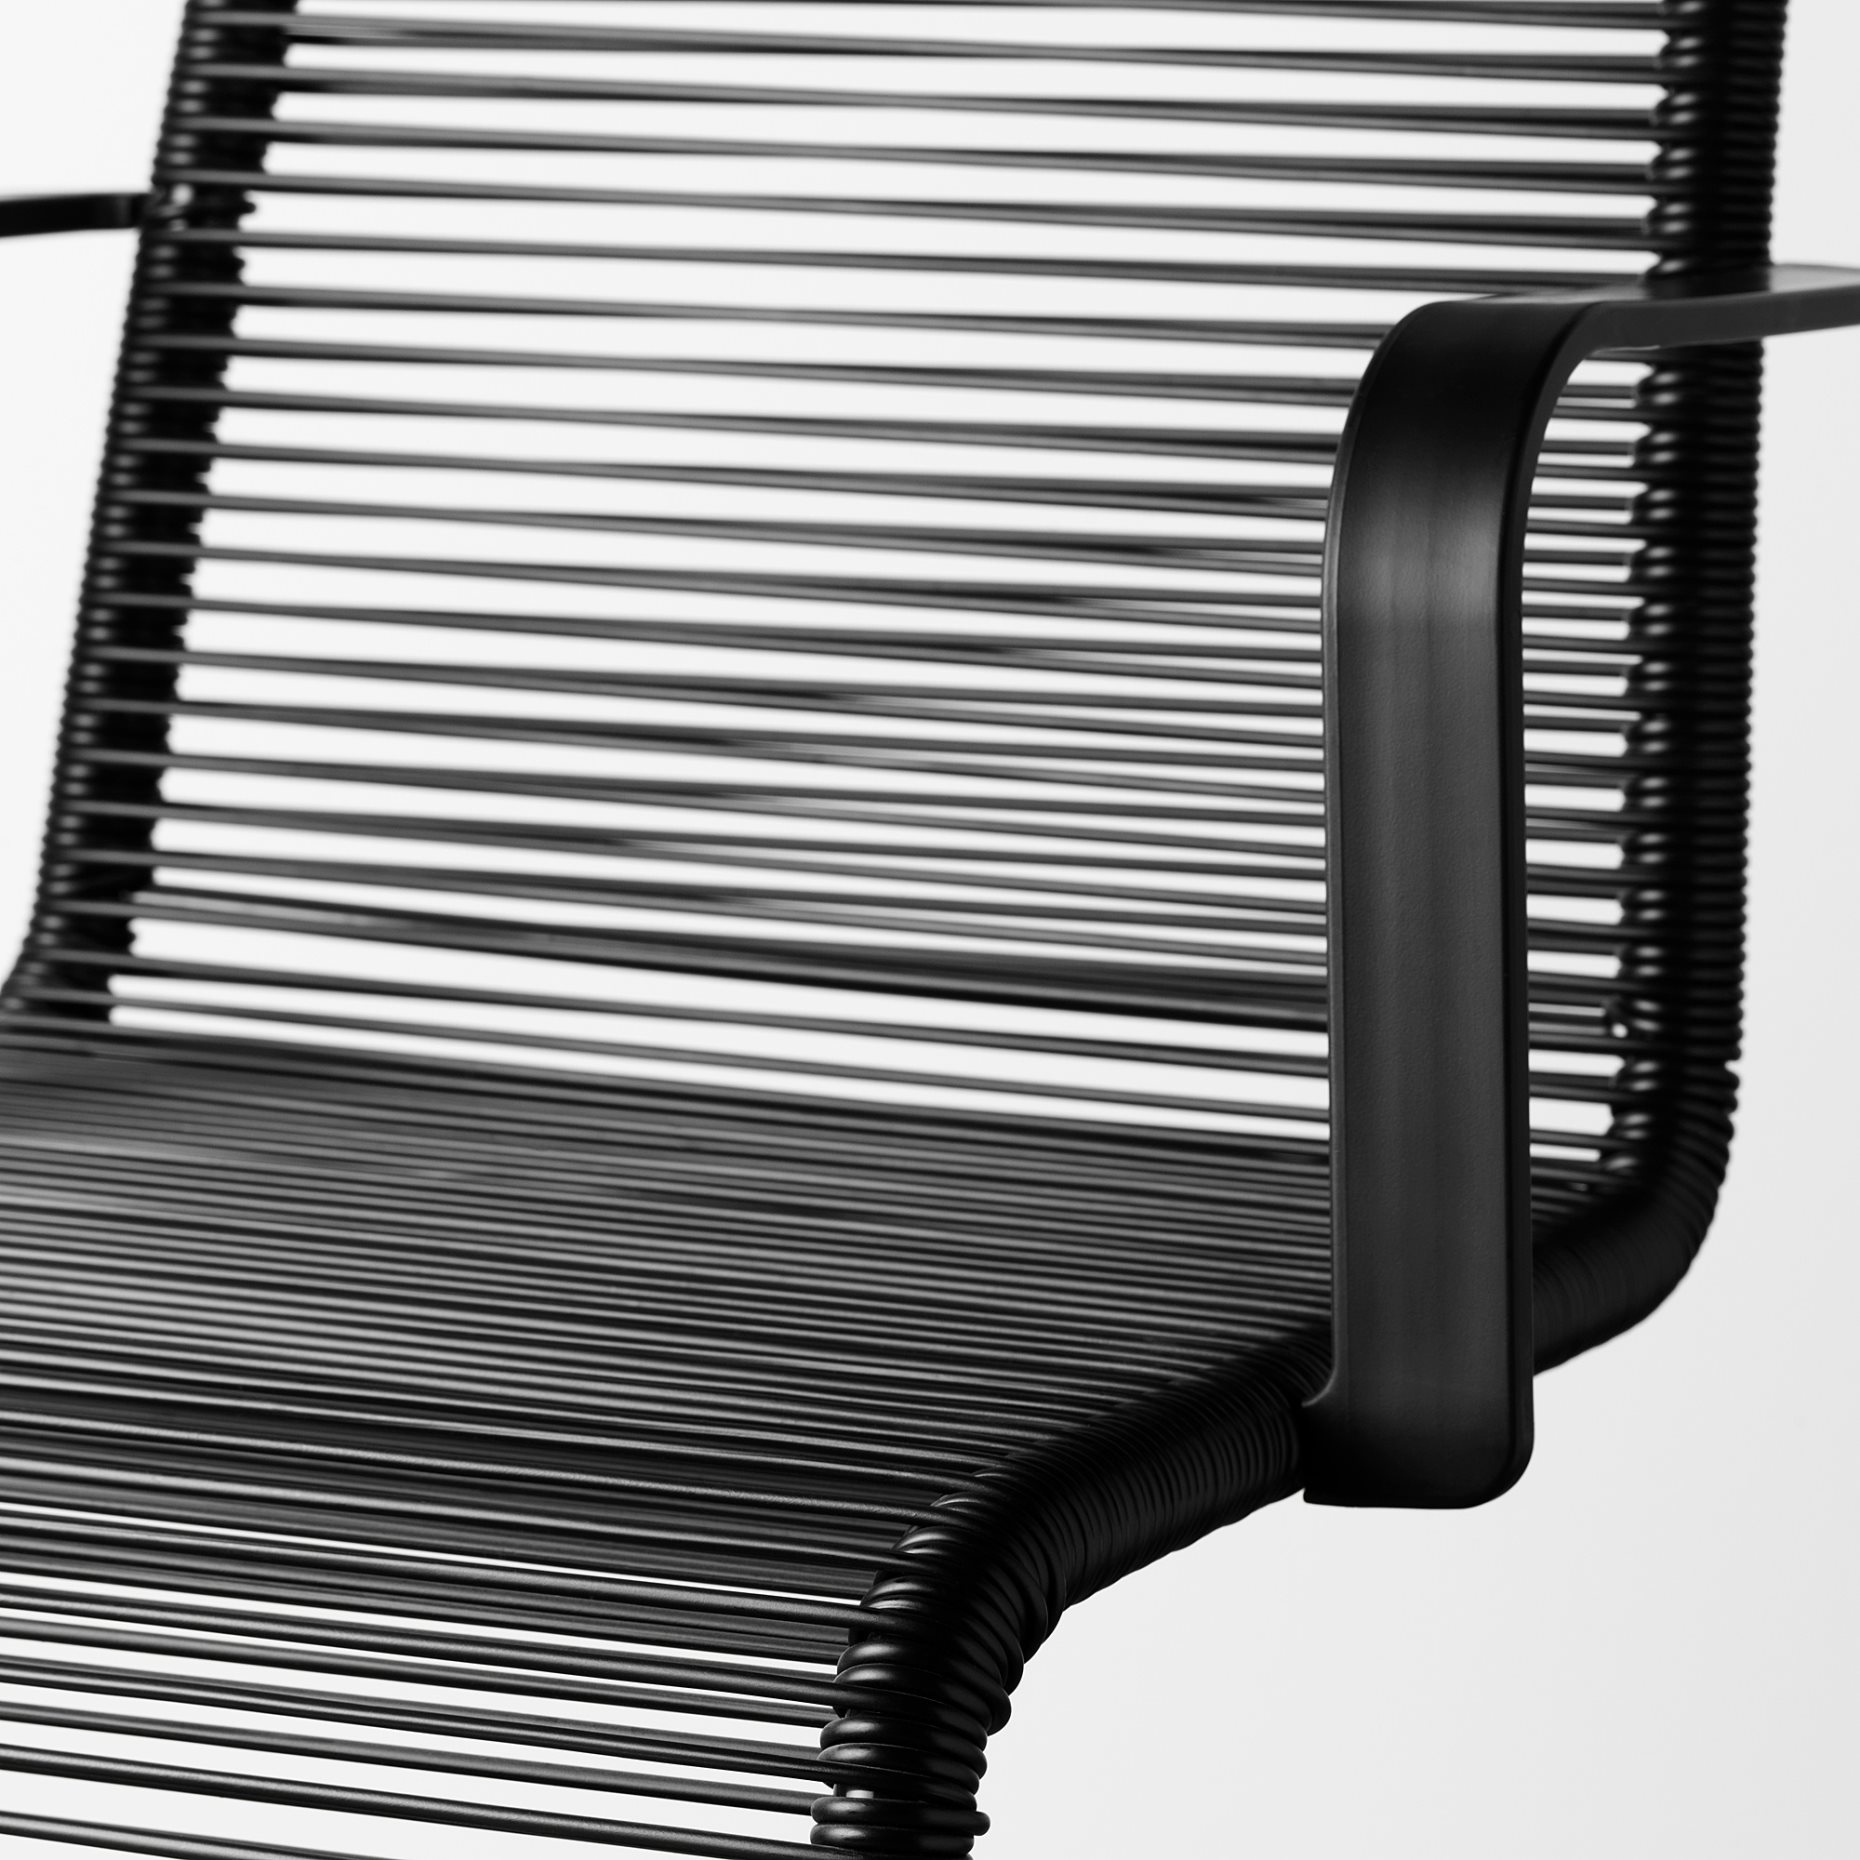 VÄSMAN, καρέκλα με μπράτσα, εξωτερικού χώρου, 402.116.37